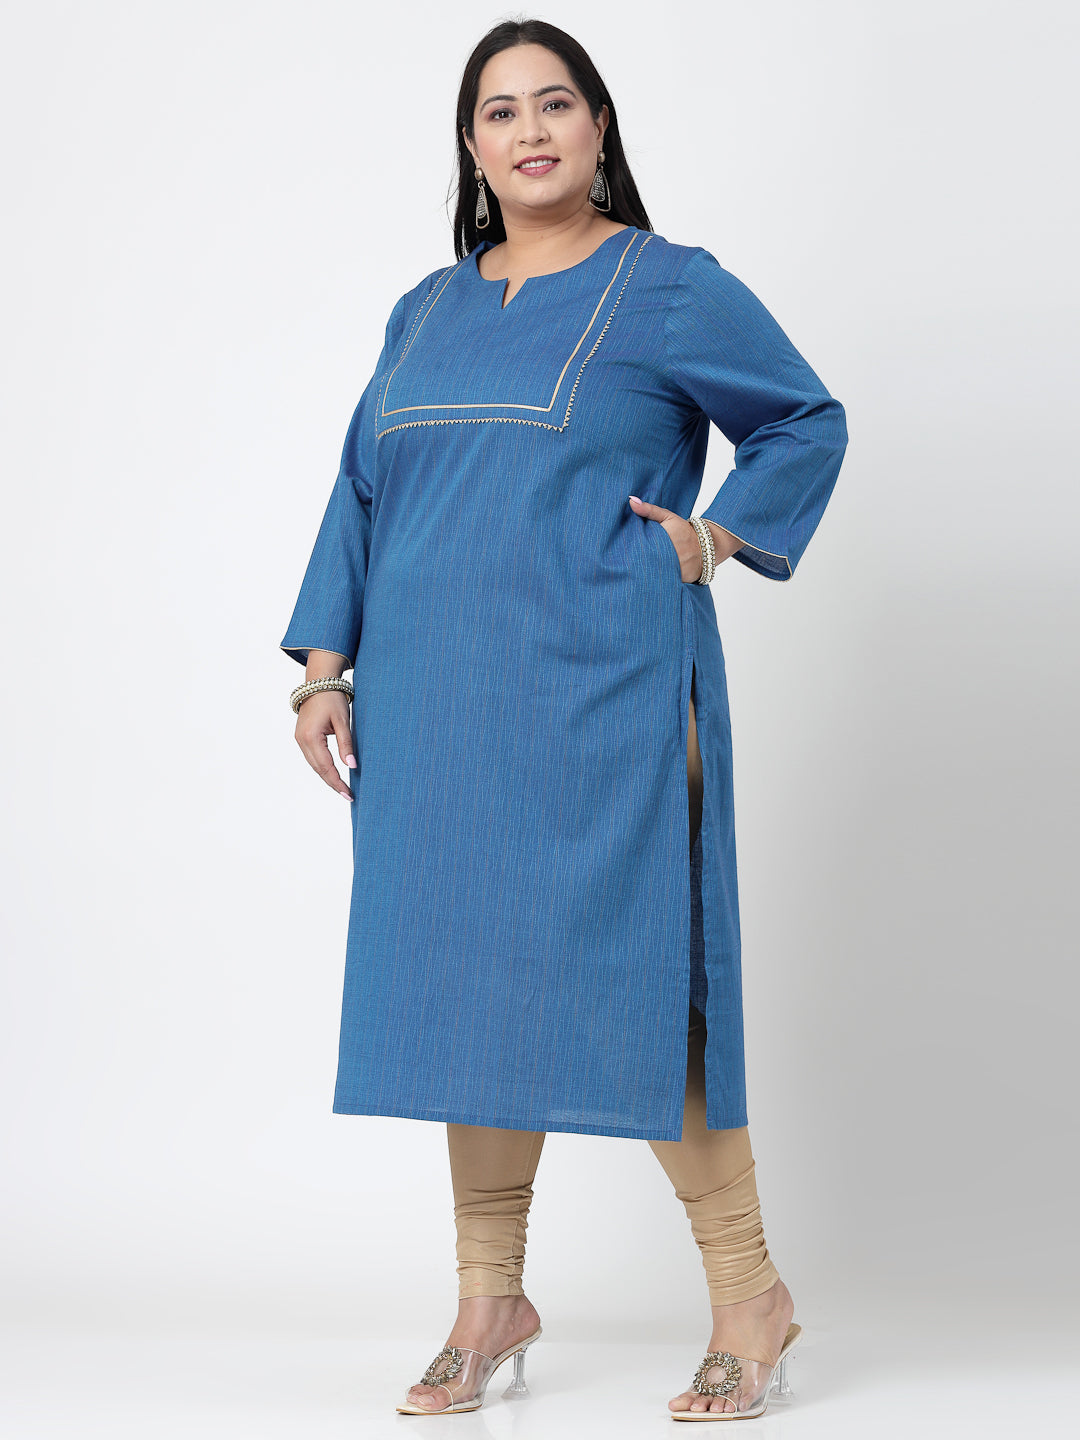 Women Plus Size Blue Festive Kurta With Lace - Kashyap Global Lifestyles LLP